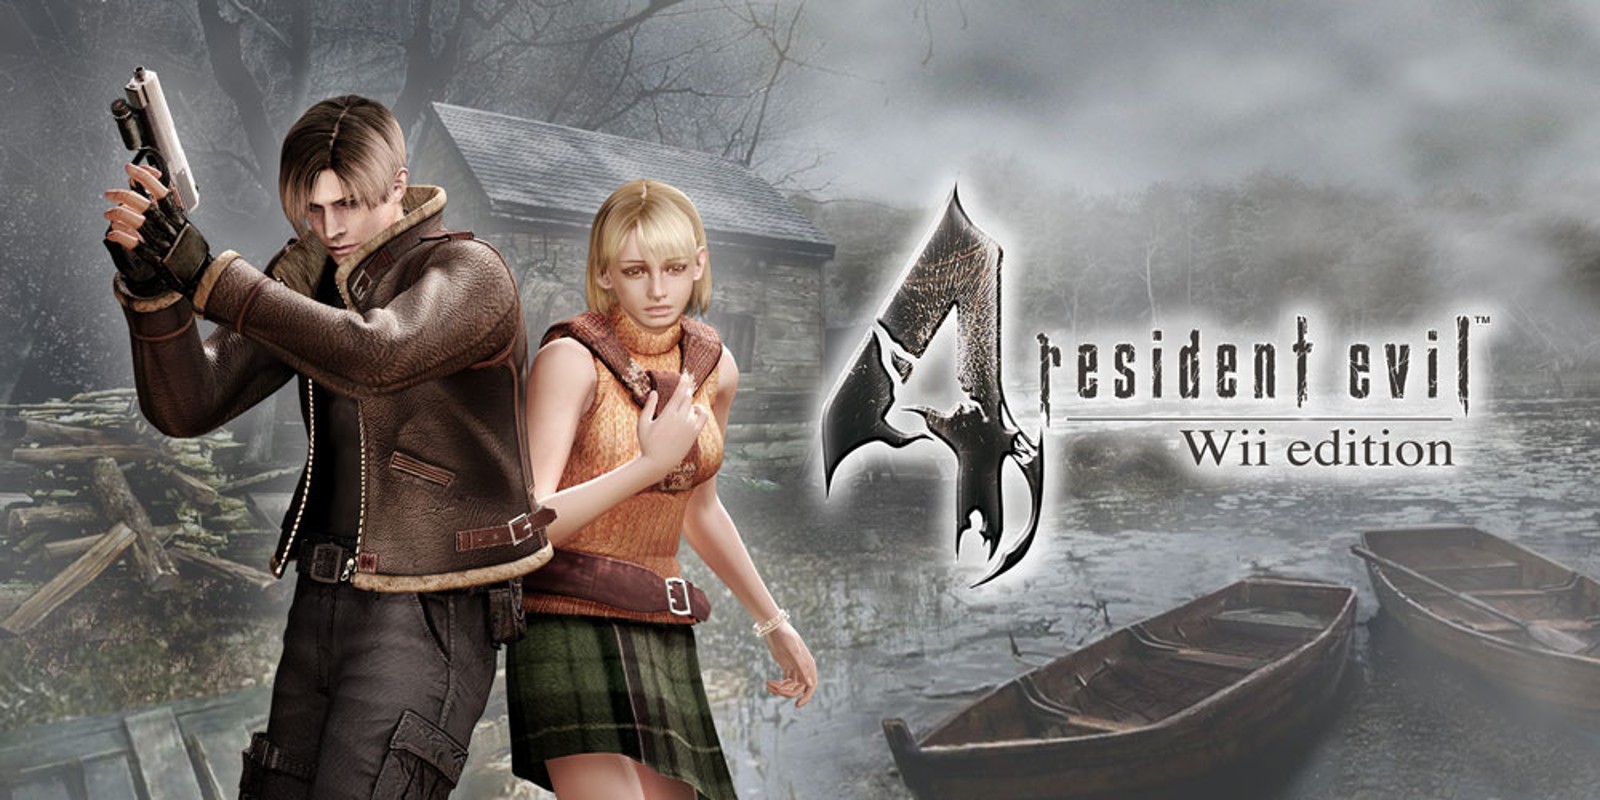 Pessimistisch baas Bekijk het internet Resident Evil 4 Wii edition | Wii | Games | Nintendo